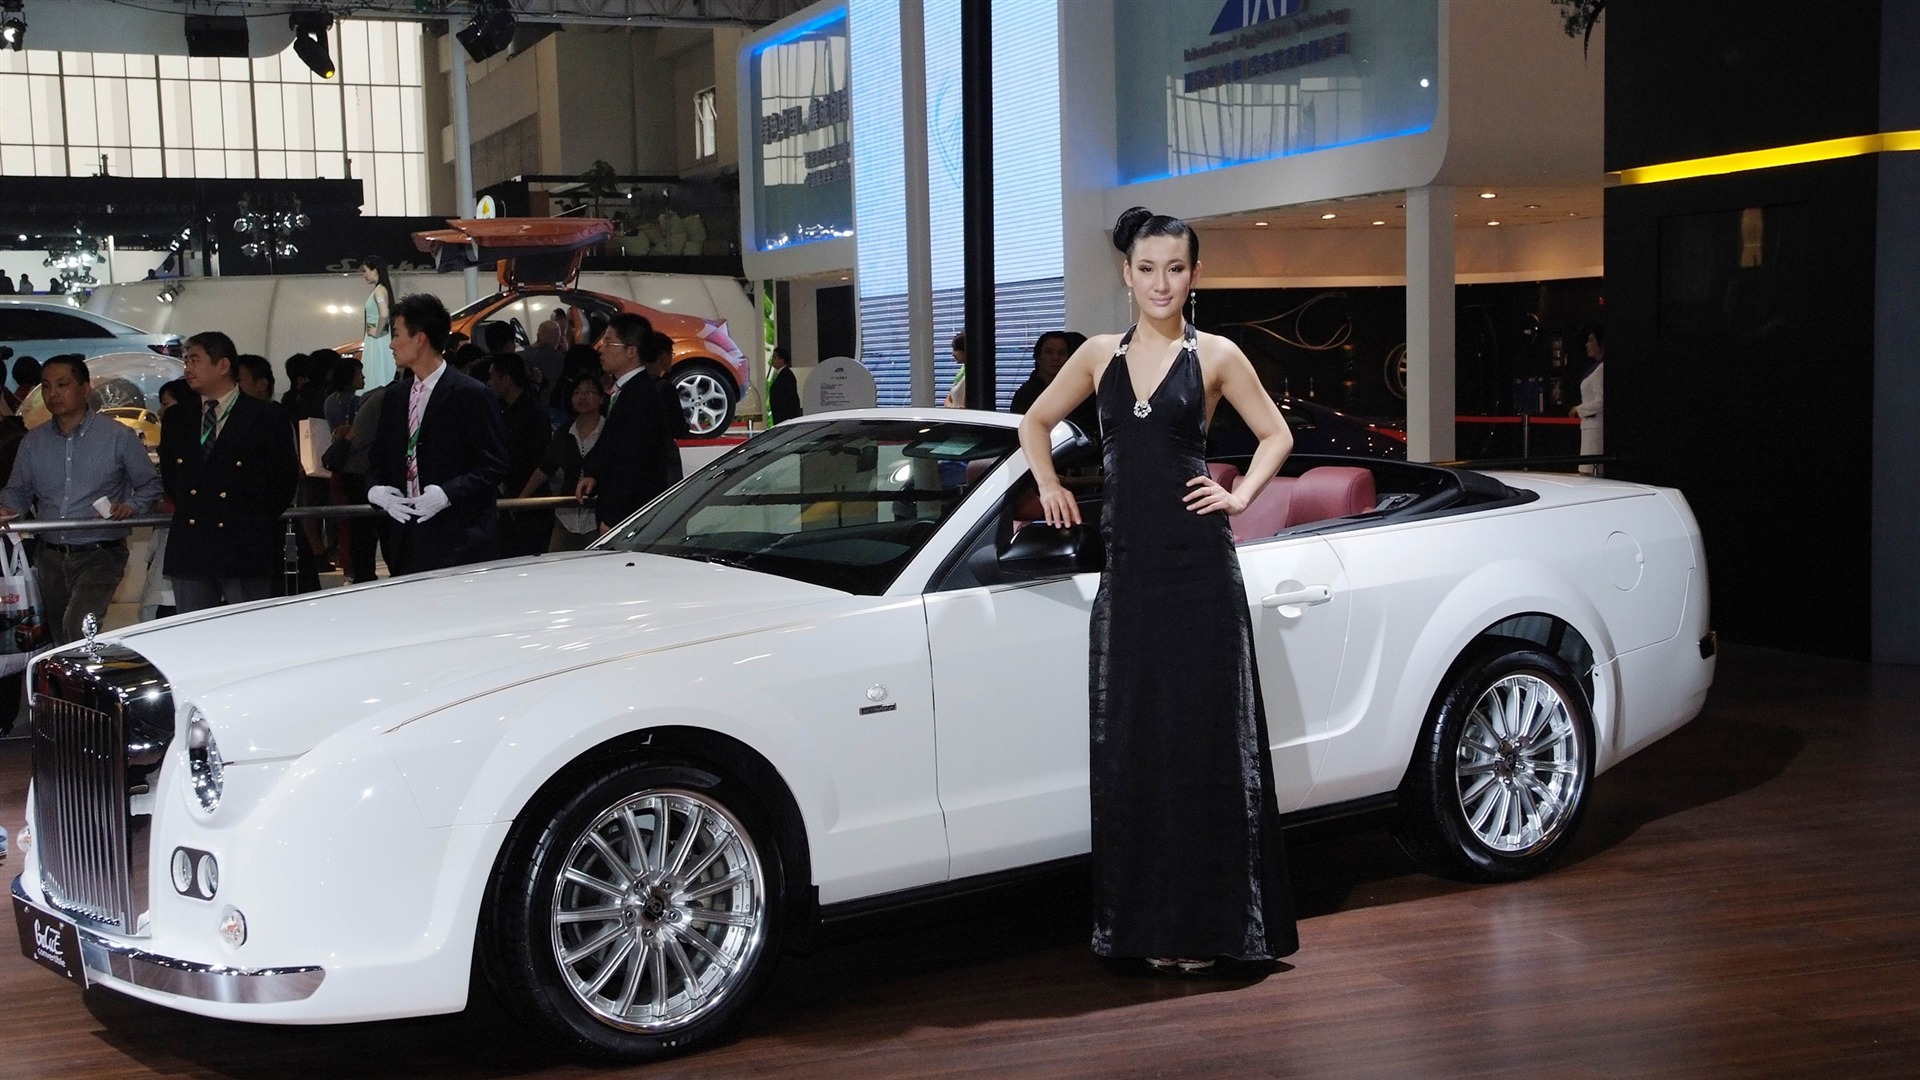 2010 Salón Internacional del Automóvil de Beijing Heung Che belleza (obras barras de refuerzo) #12 - 1920x1080